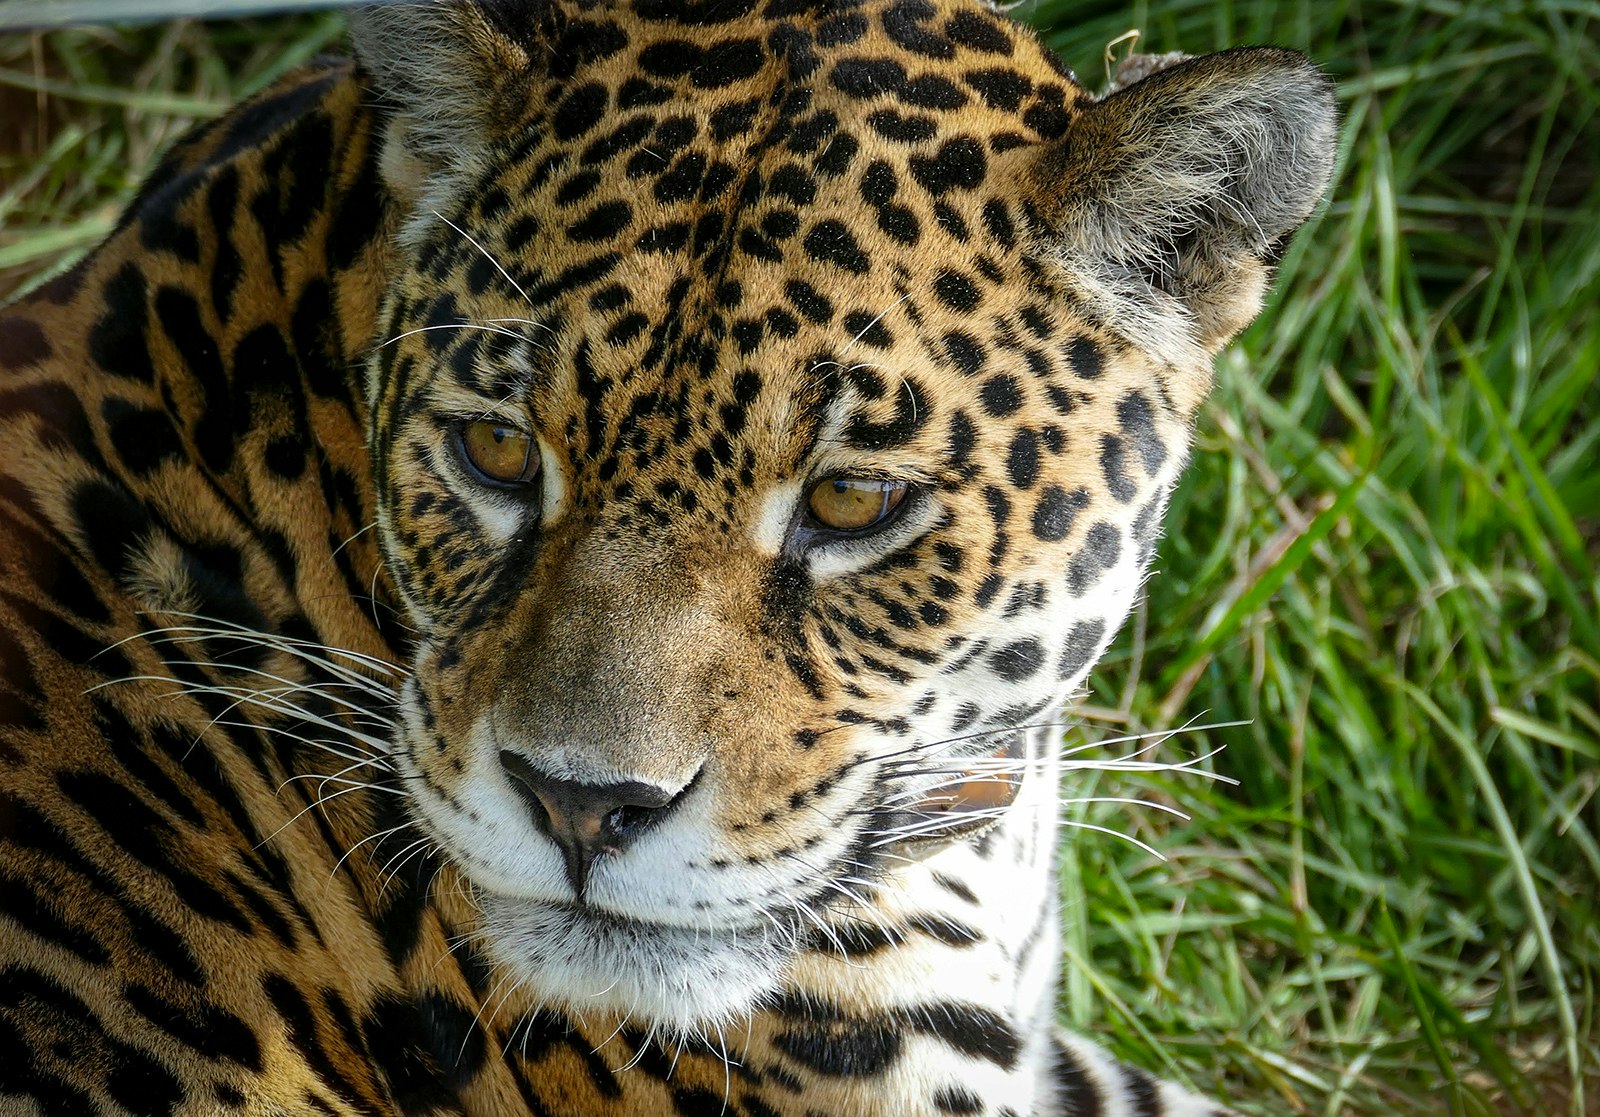 A close-up of a jaguar's face against a grassy background. Ibera, Northeast Argentina.